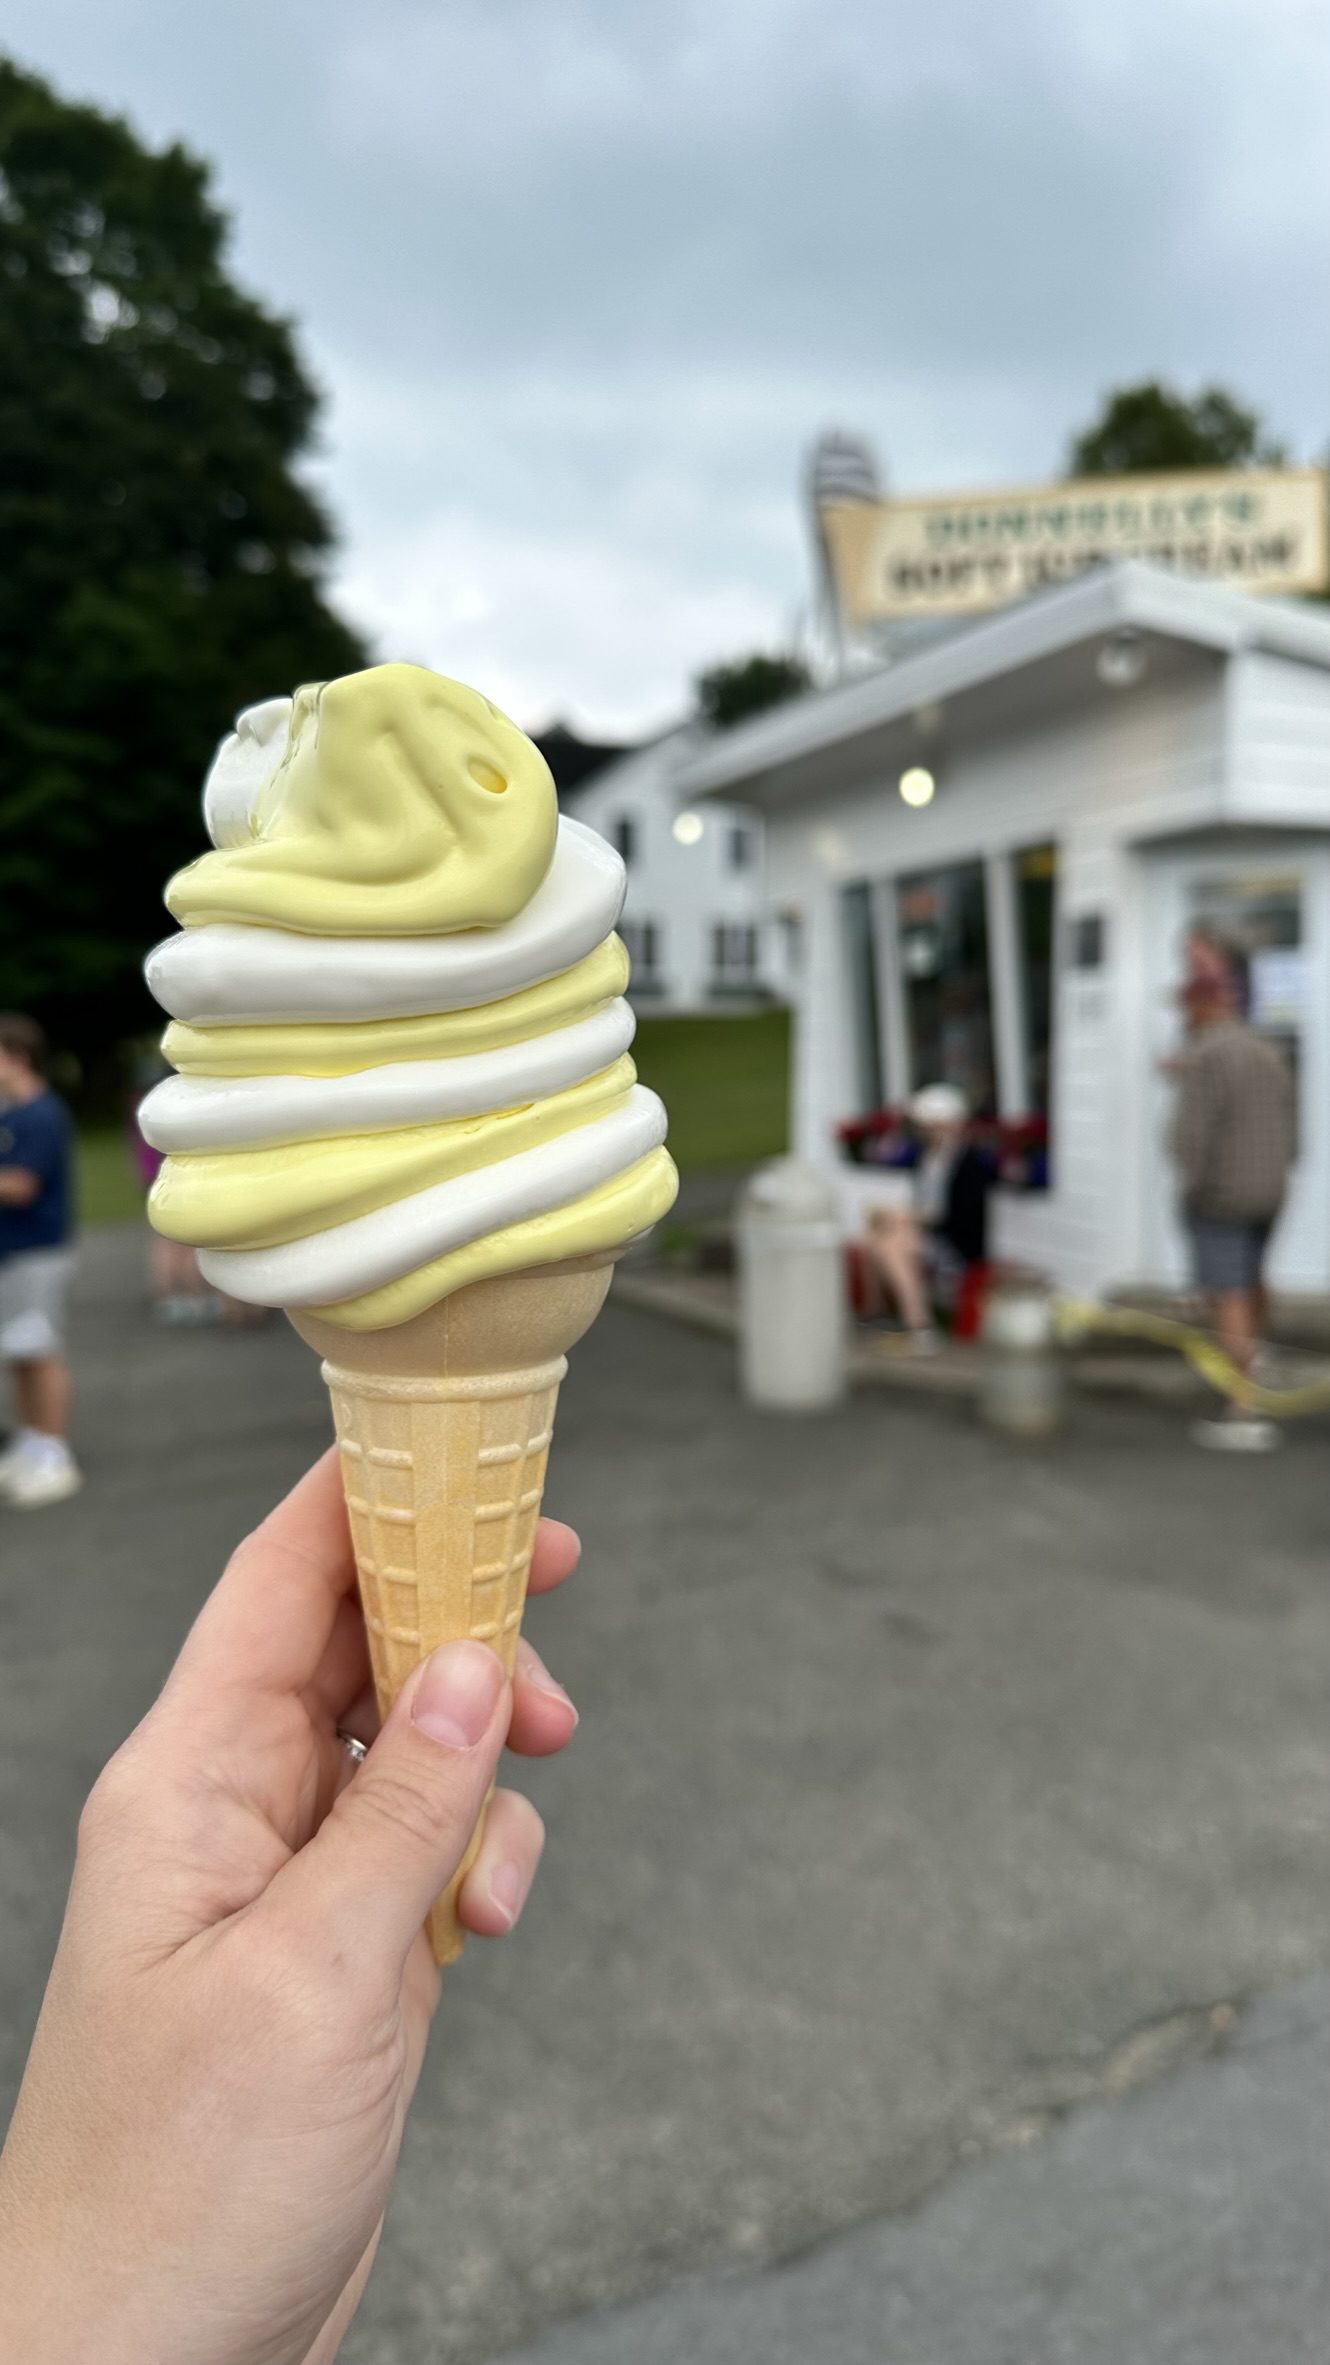 Donnelly's Ice Cream Cone - part of the ice cream trail